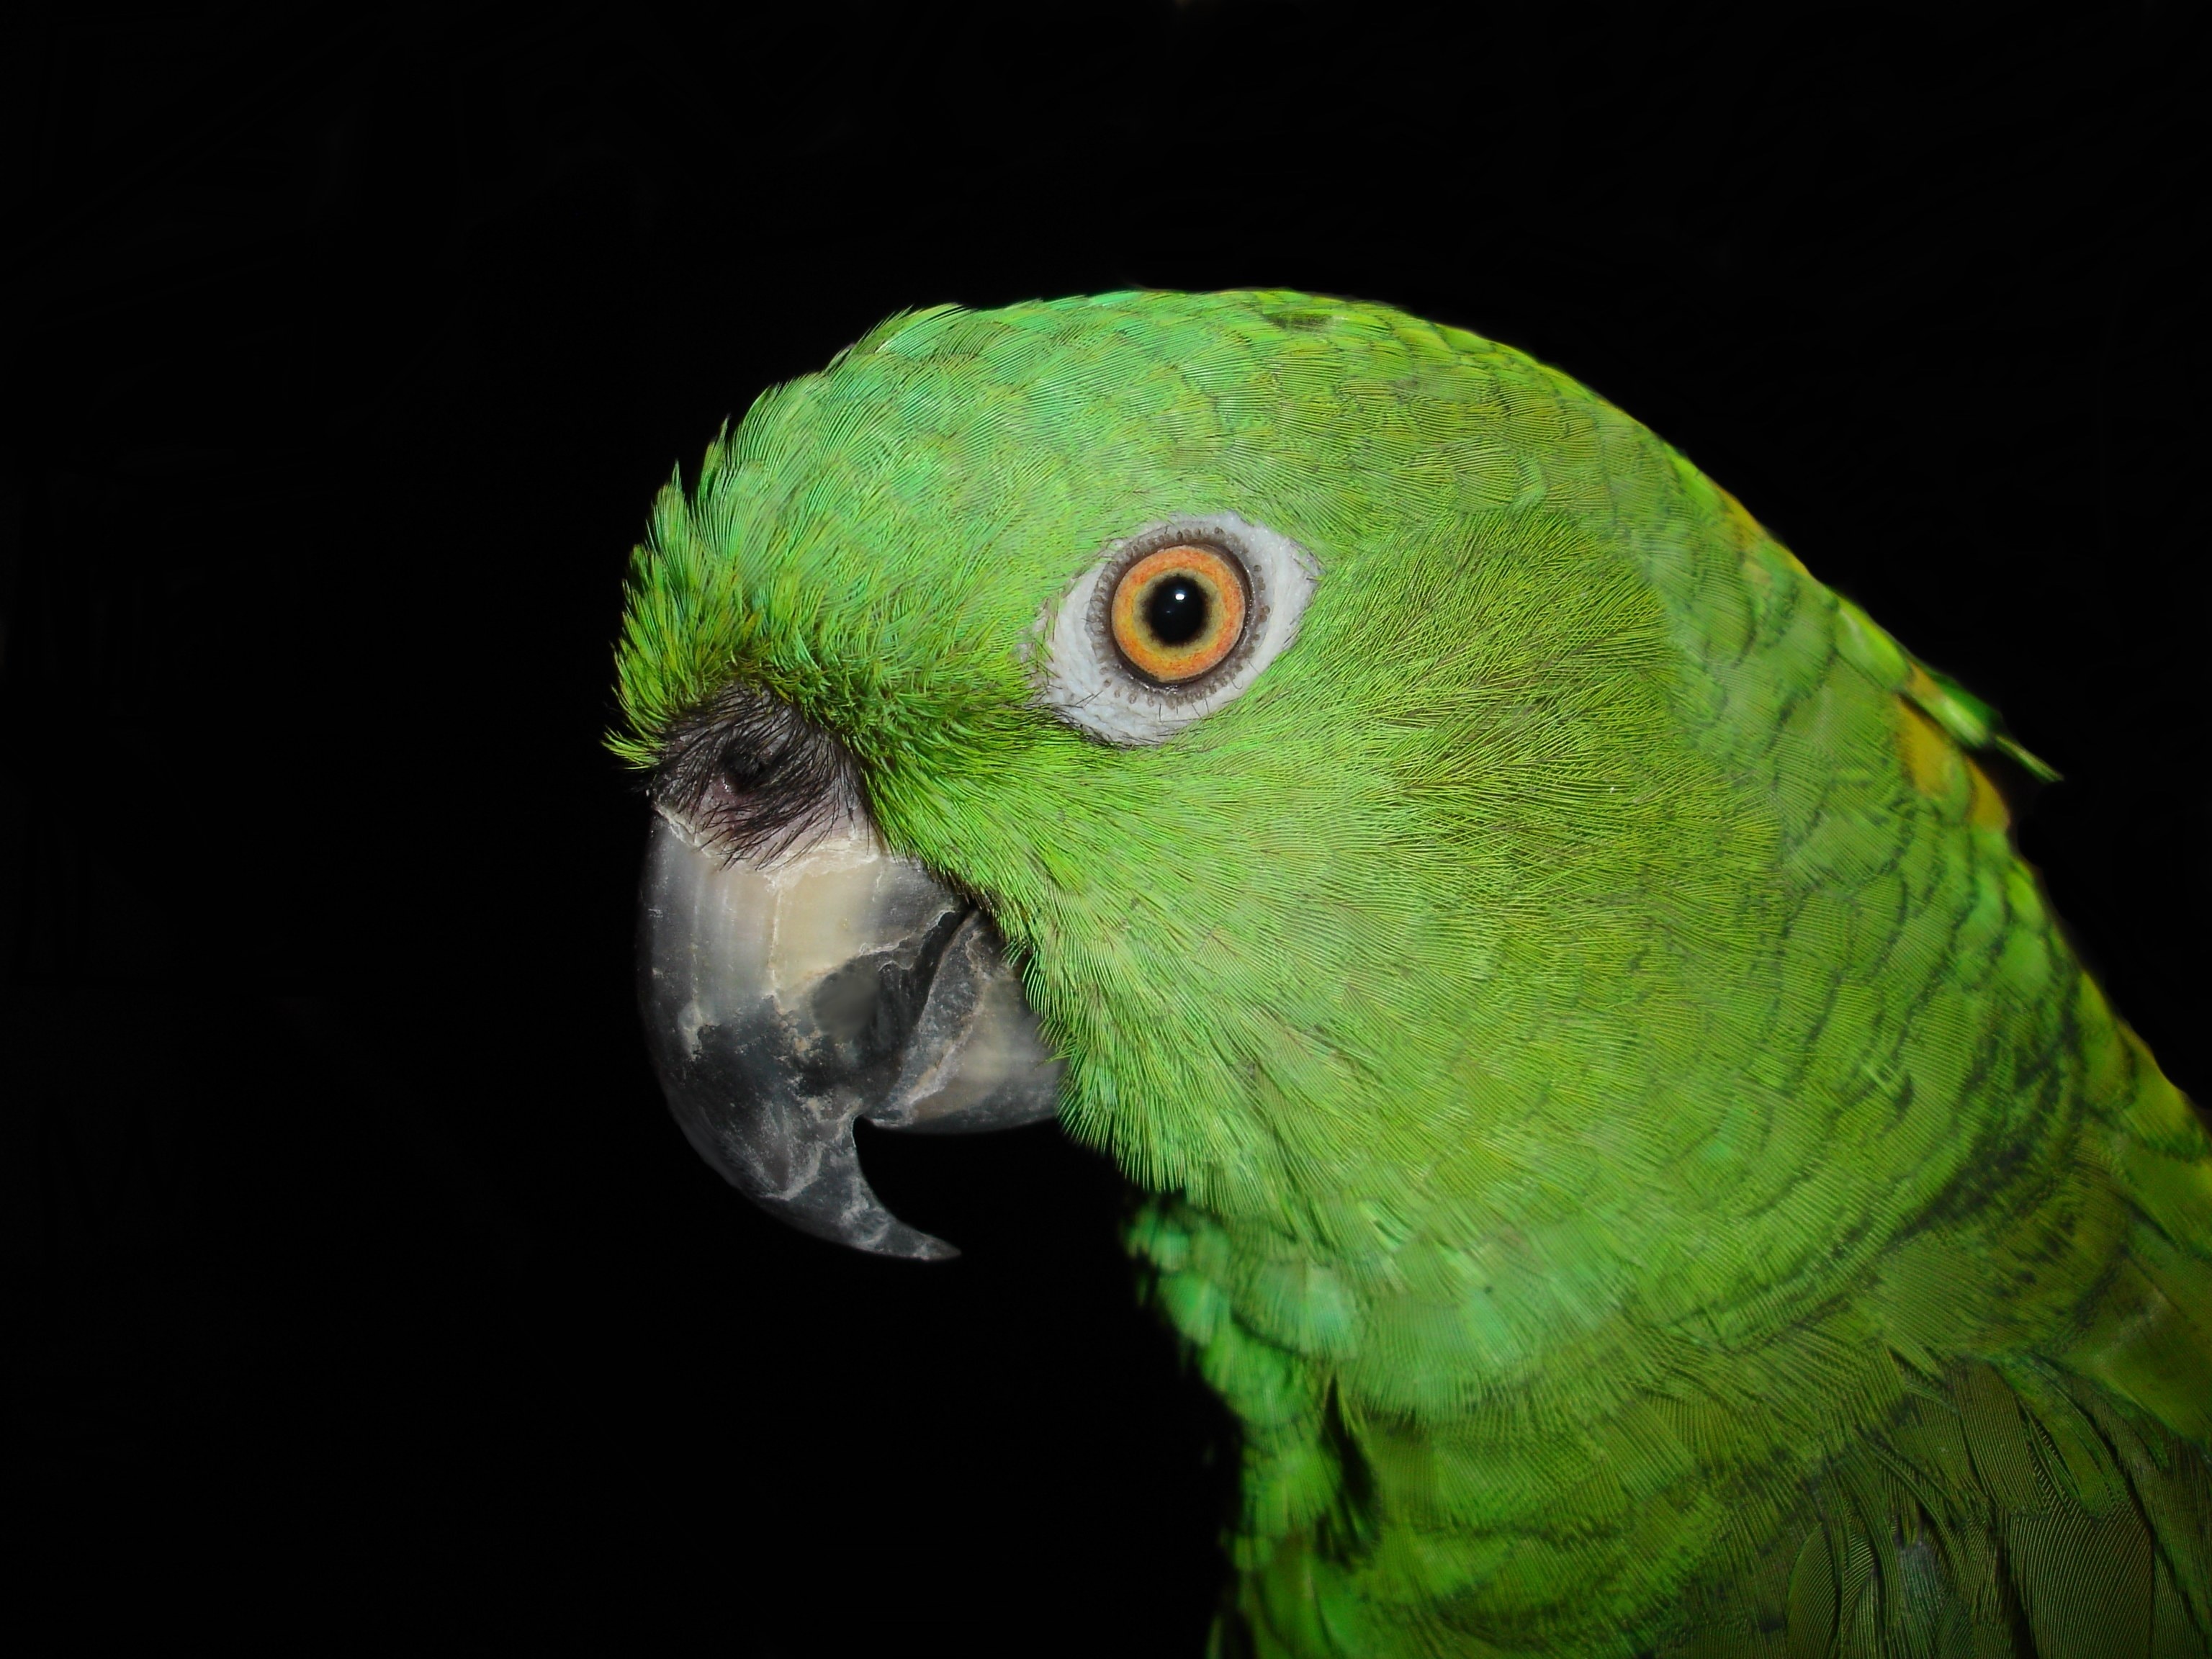 green parakeet